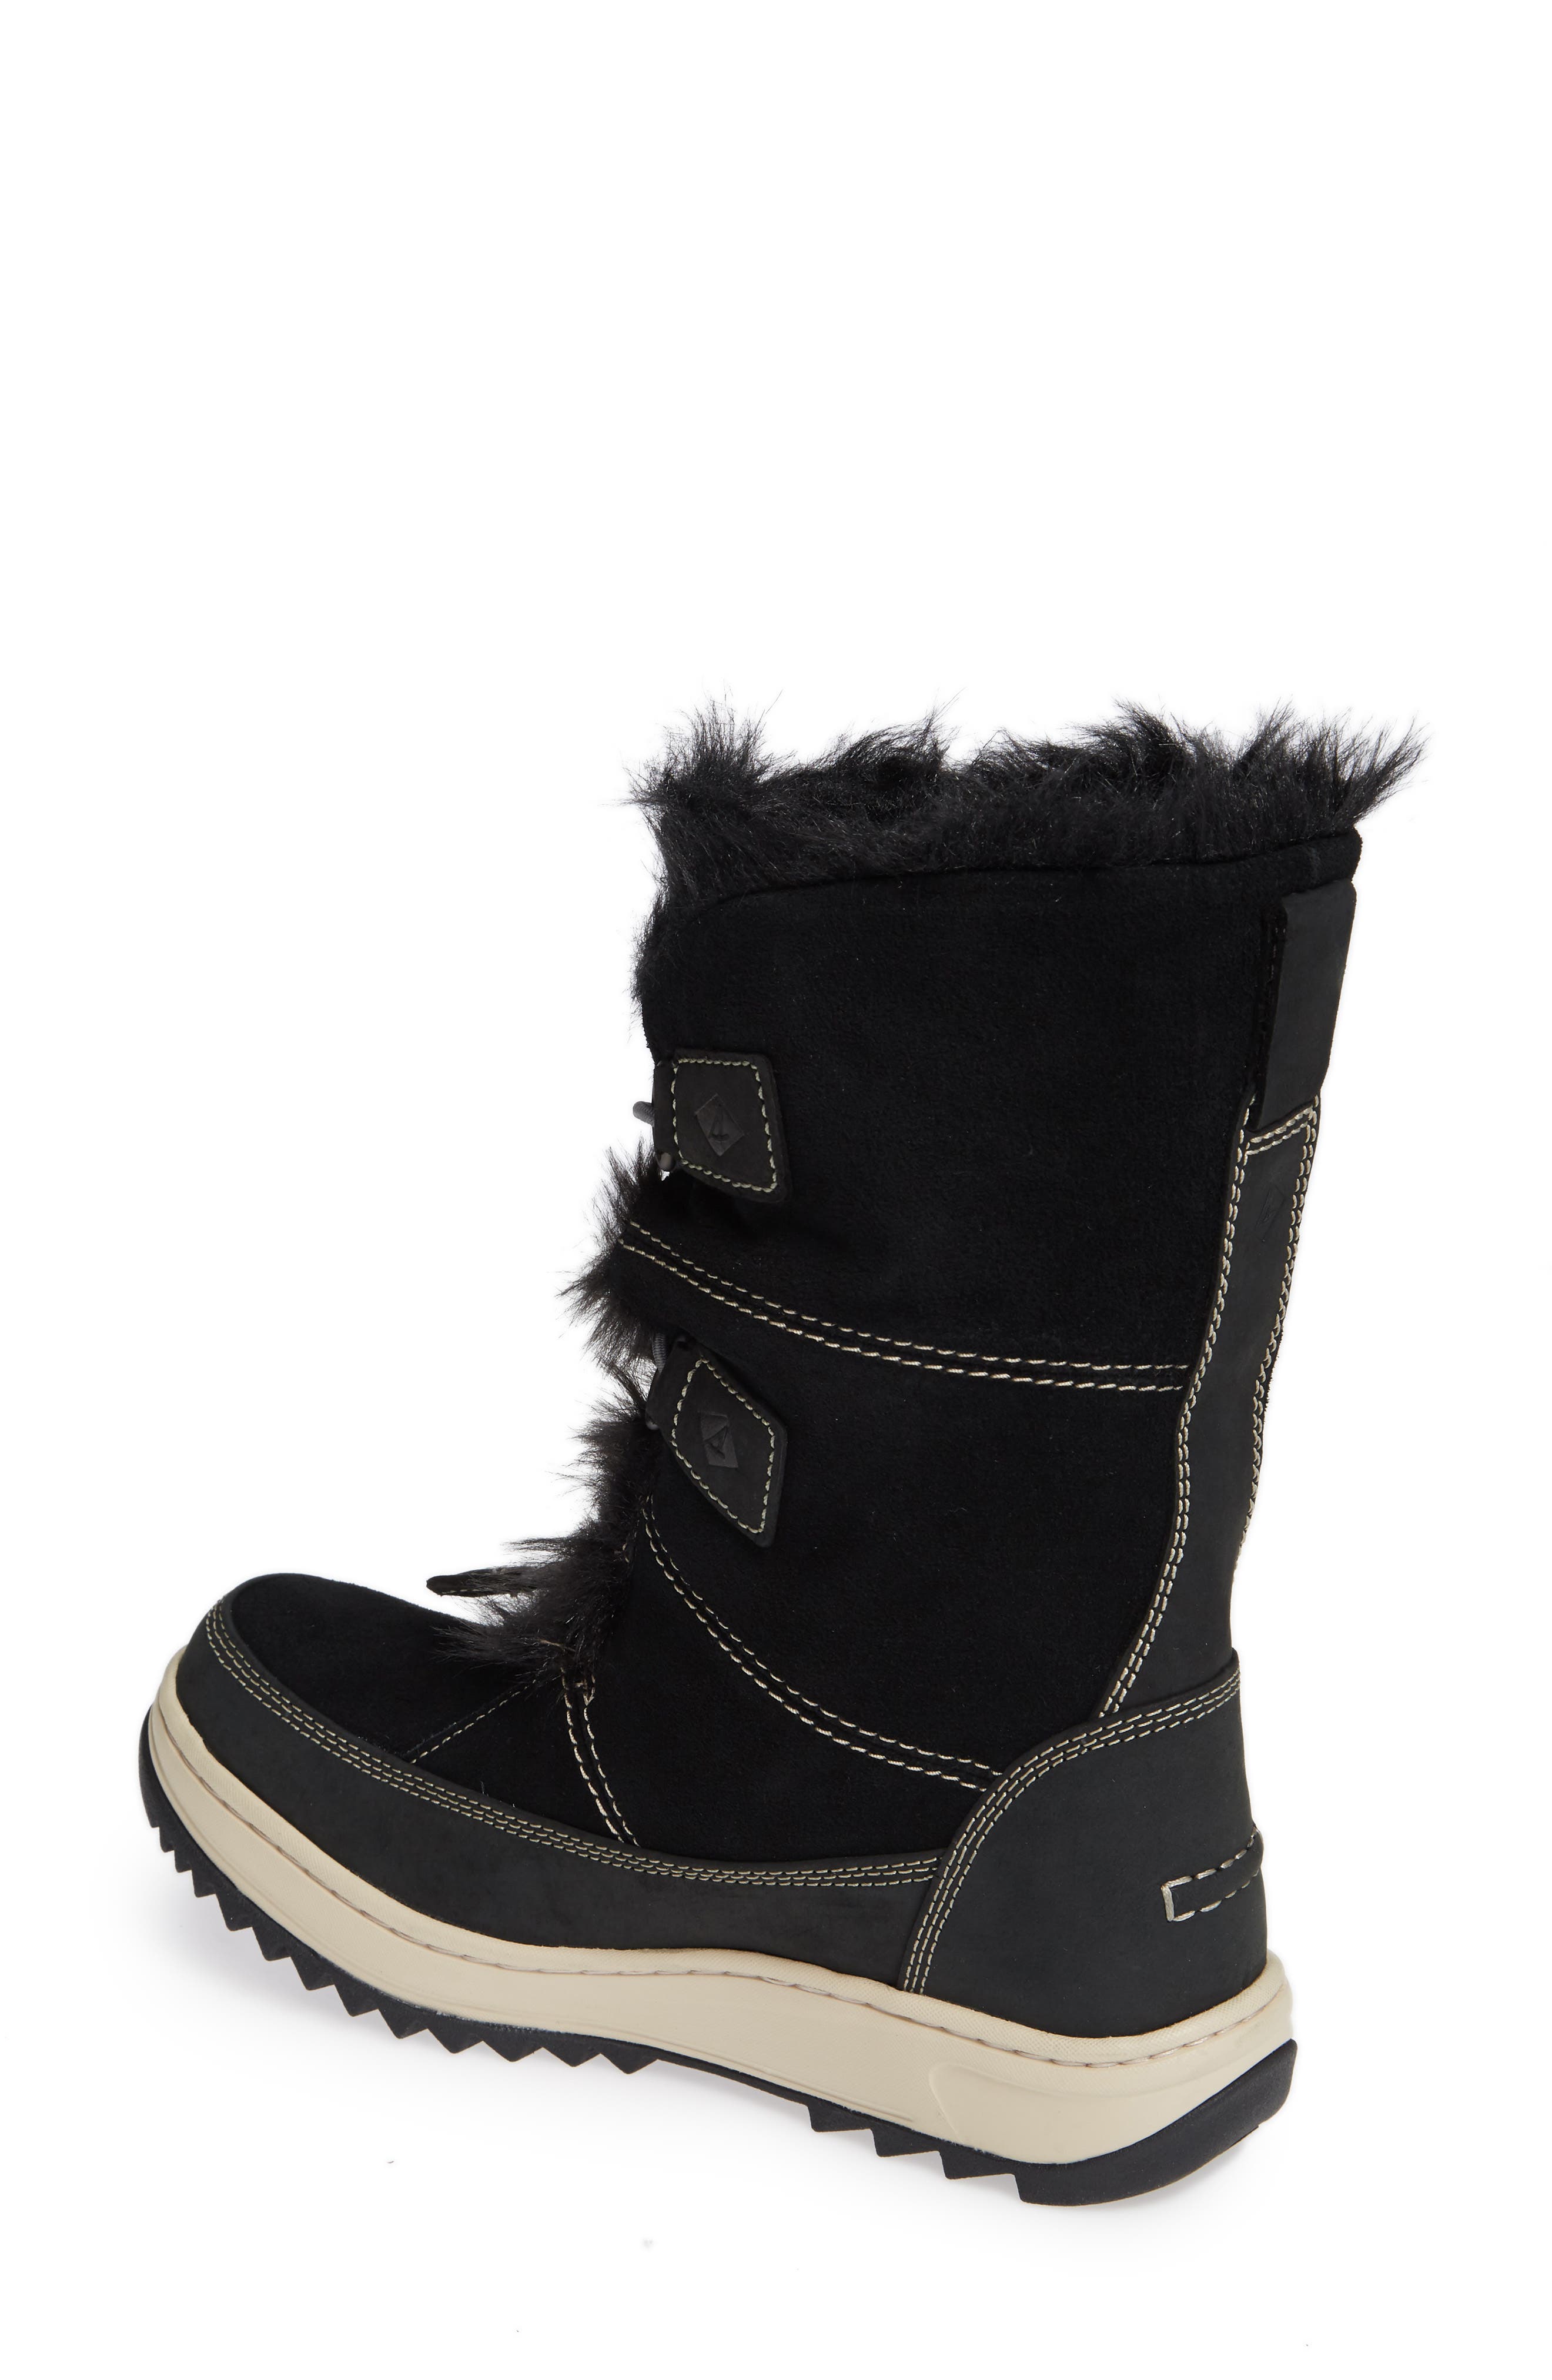 sperry women's powder valley arctic grip winter boots